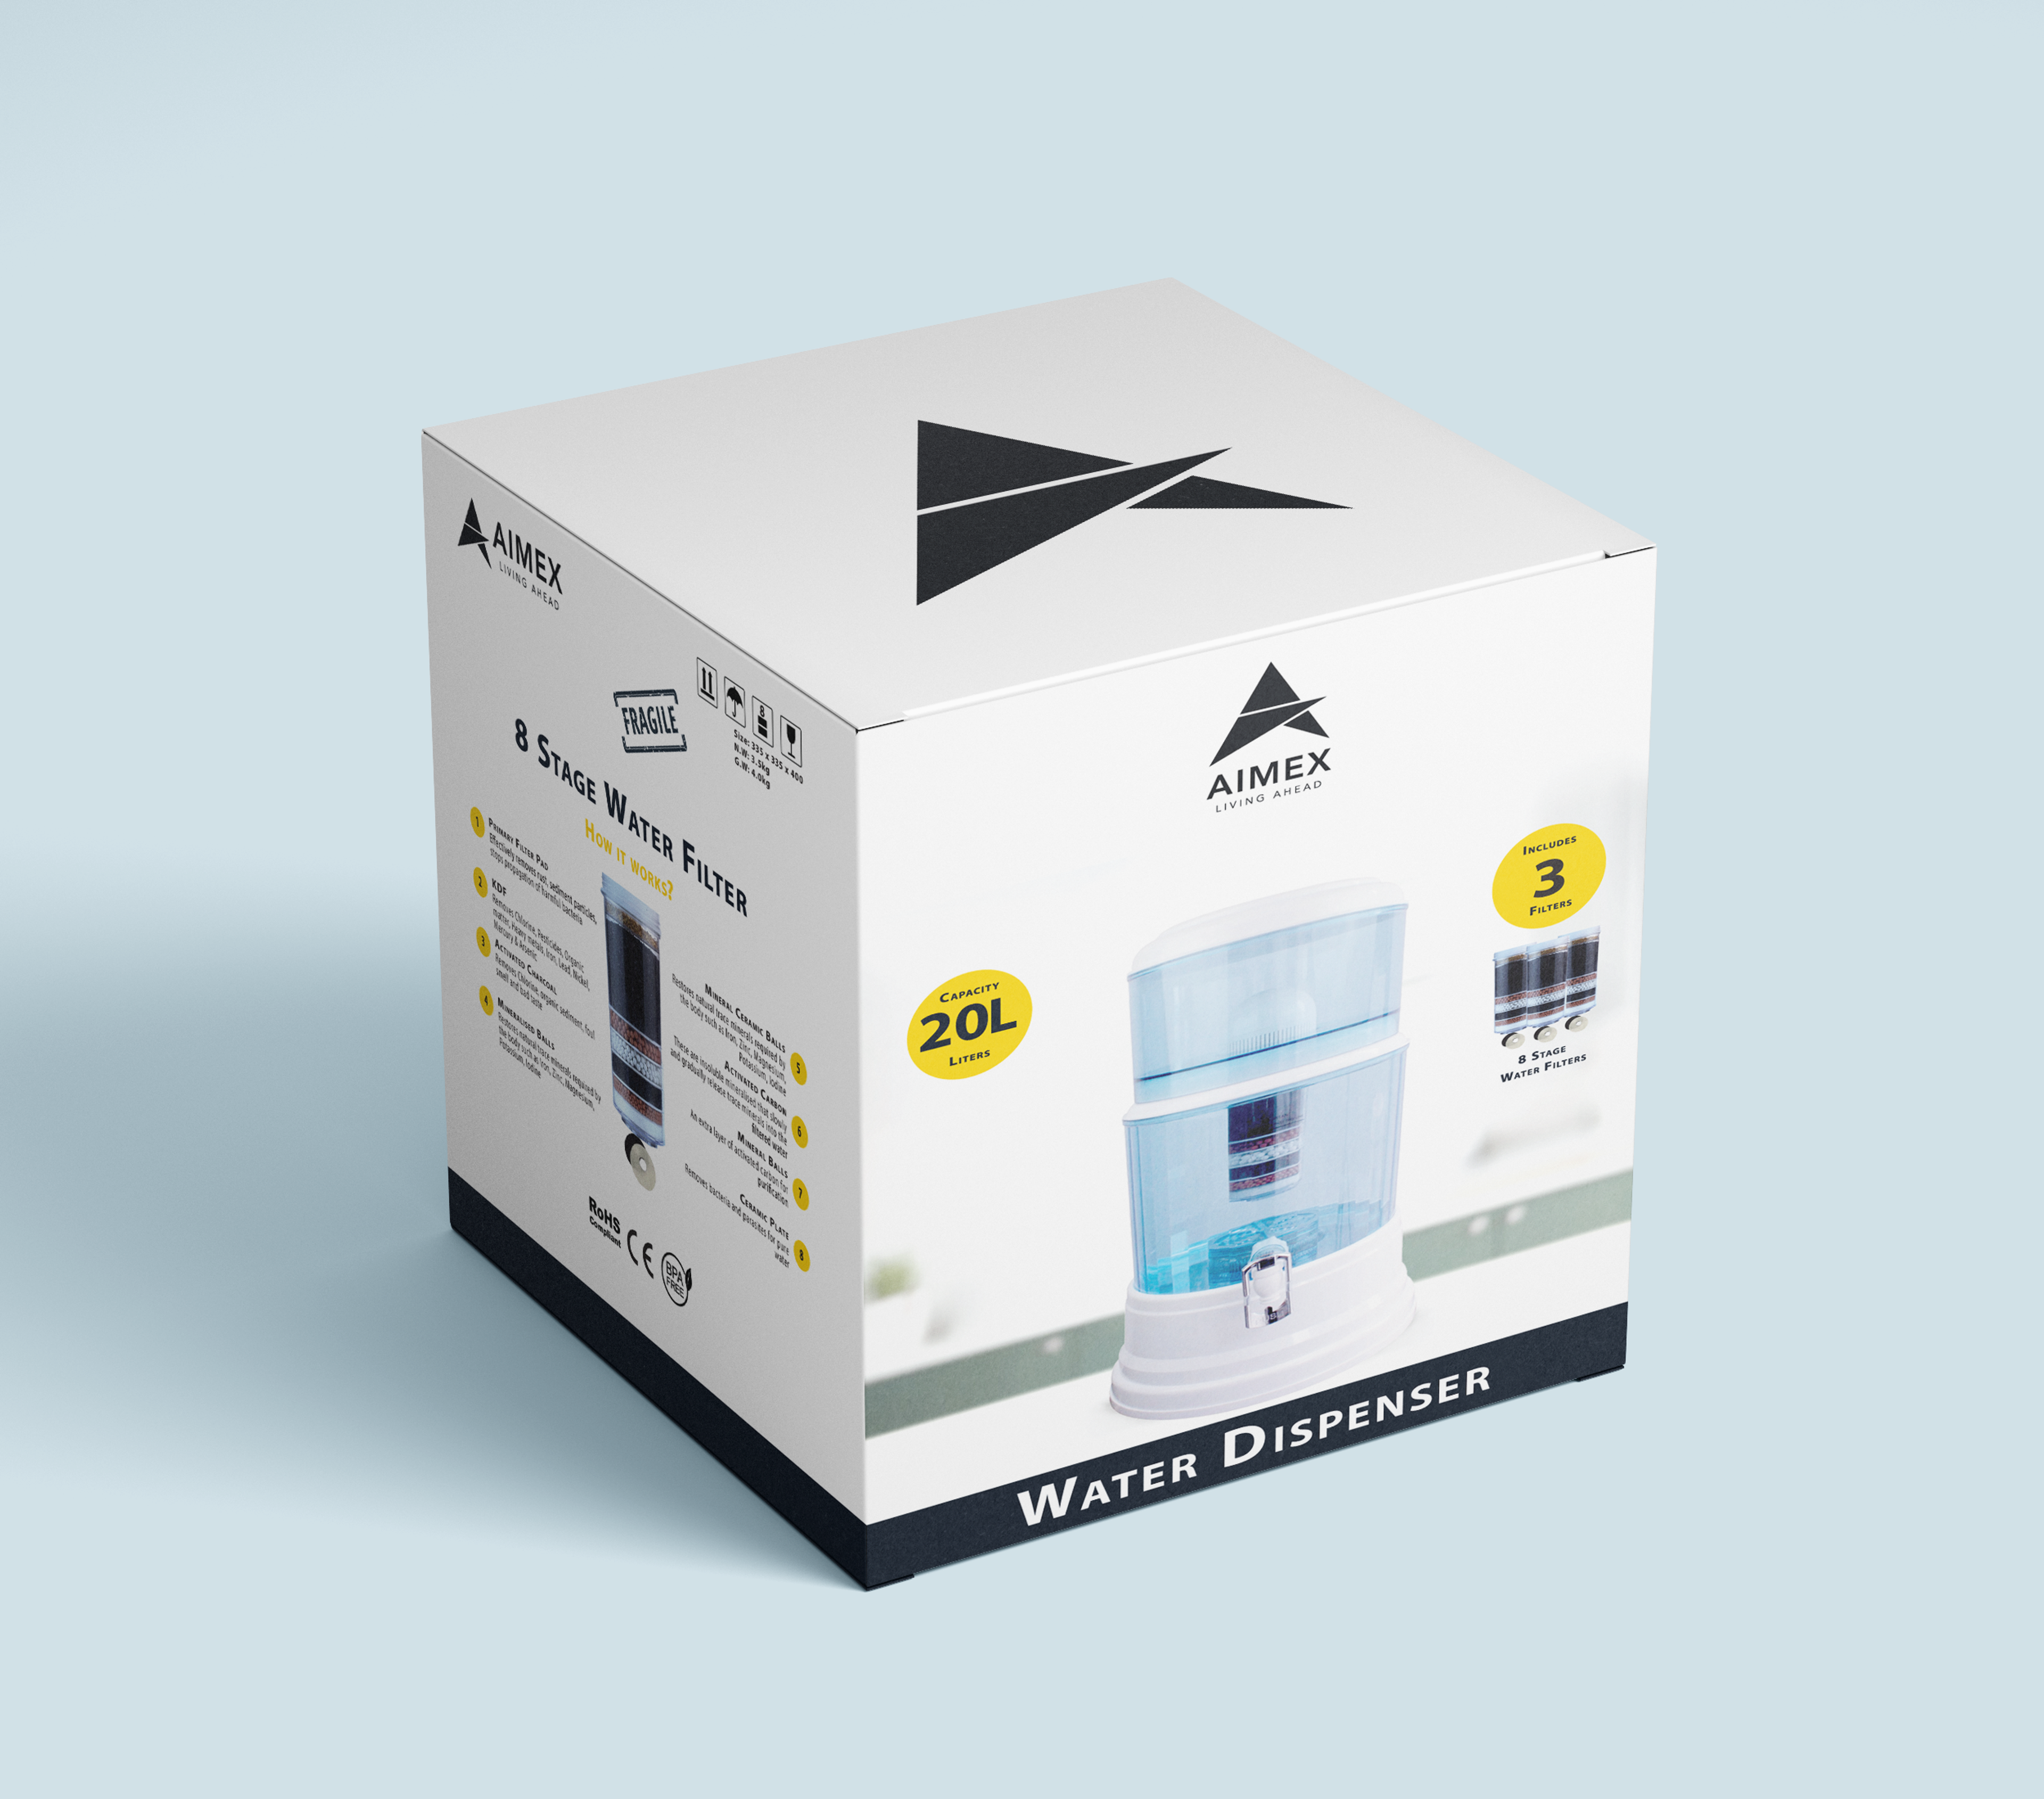 Aimex Australia water cooler box package design